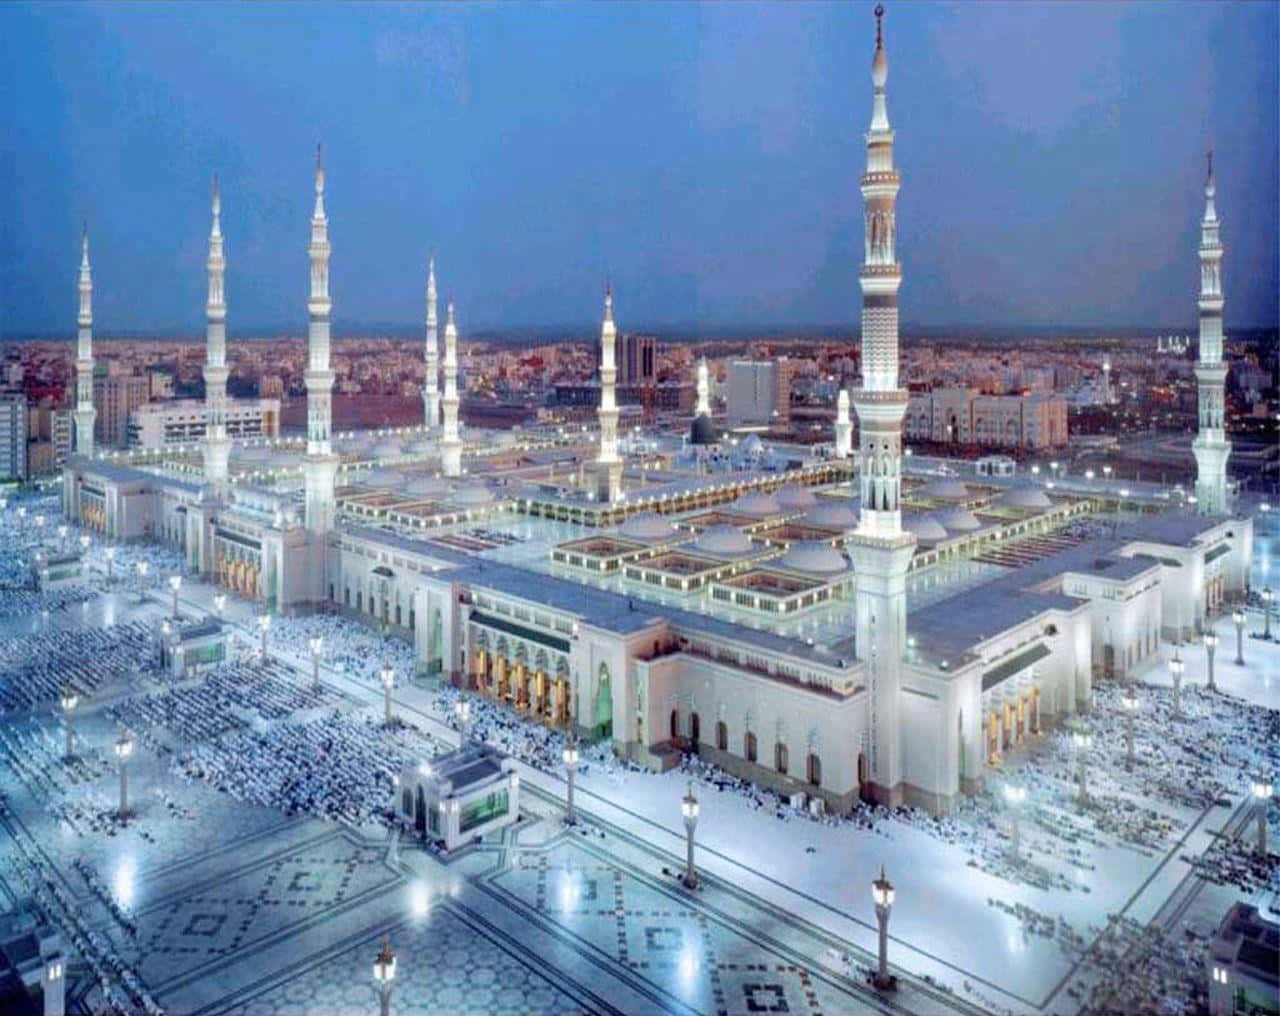 Agrande Mesquita Da Arábia Saudita